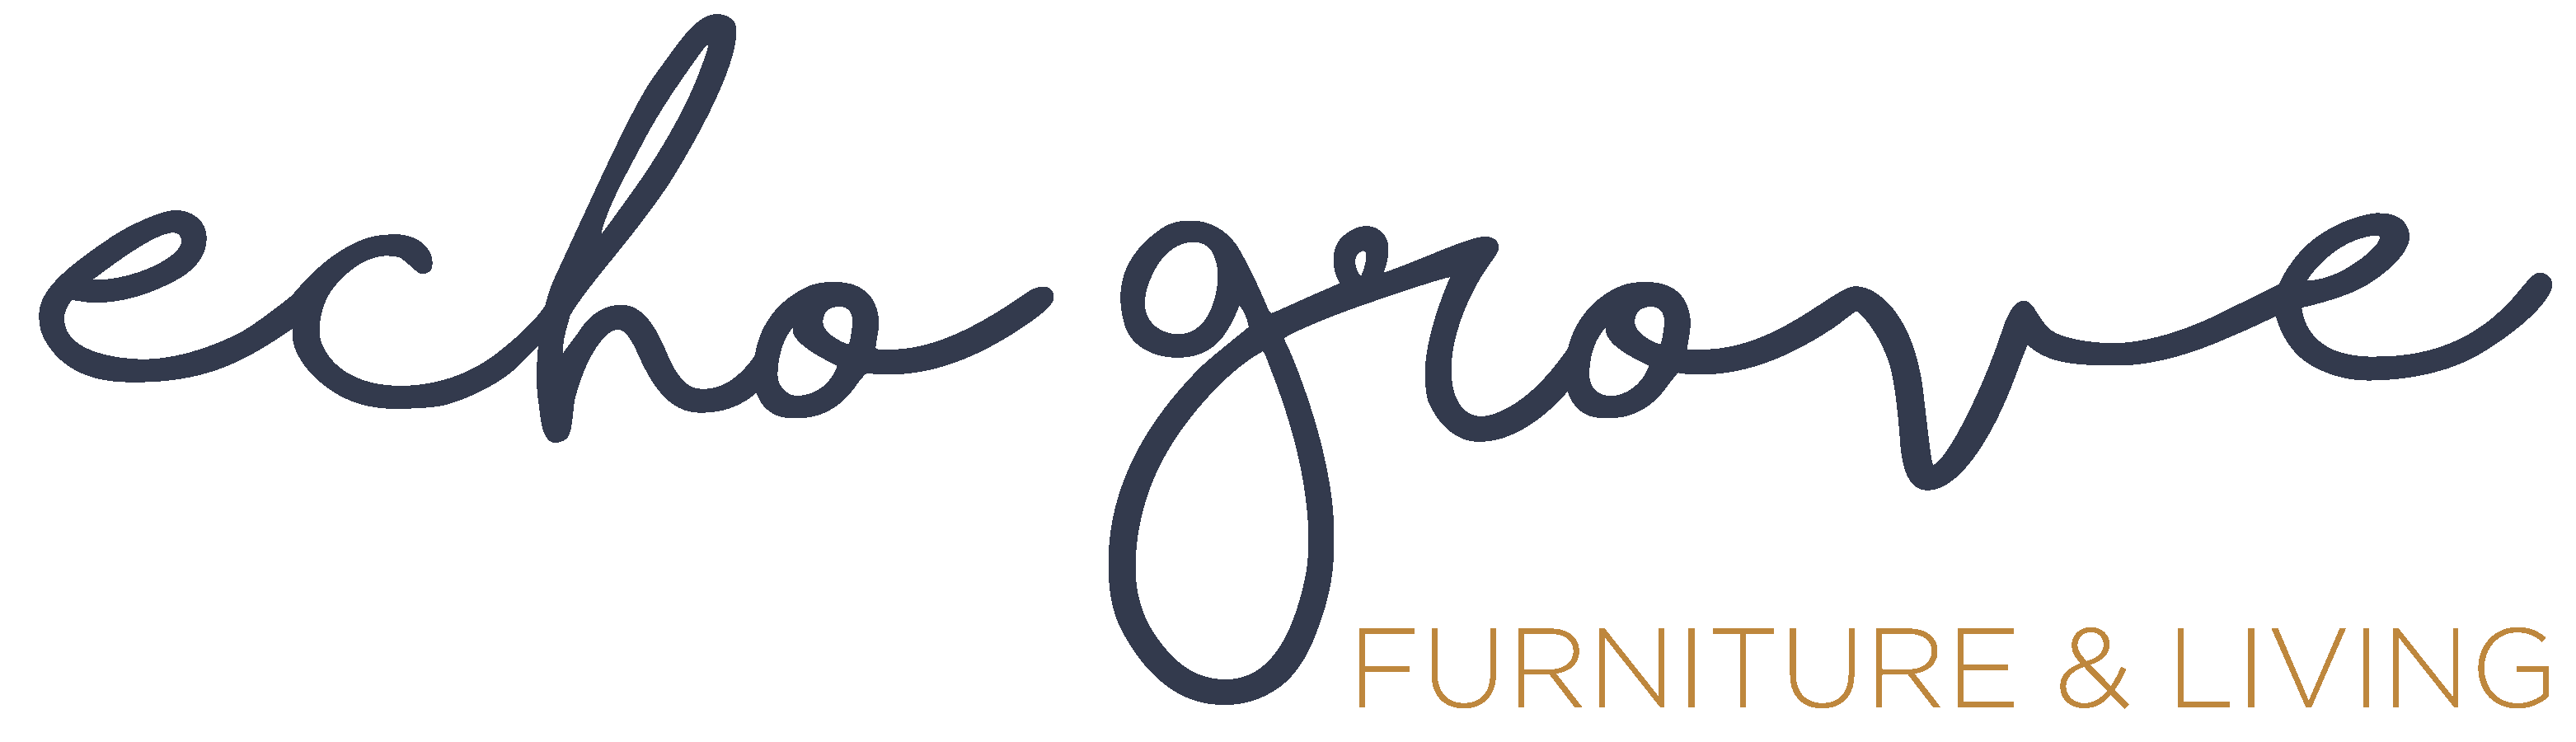 Echo Grove Furniture & Living logo